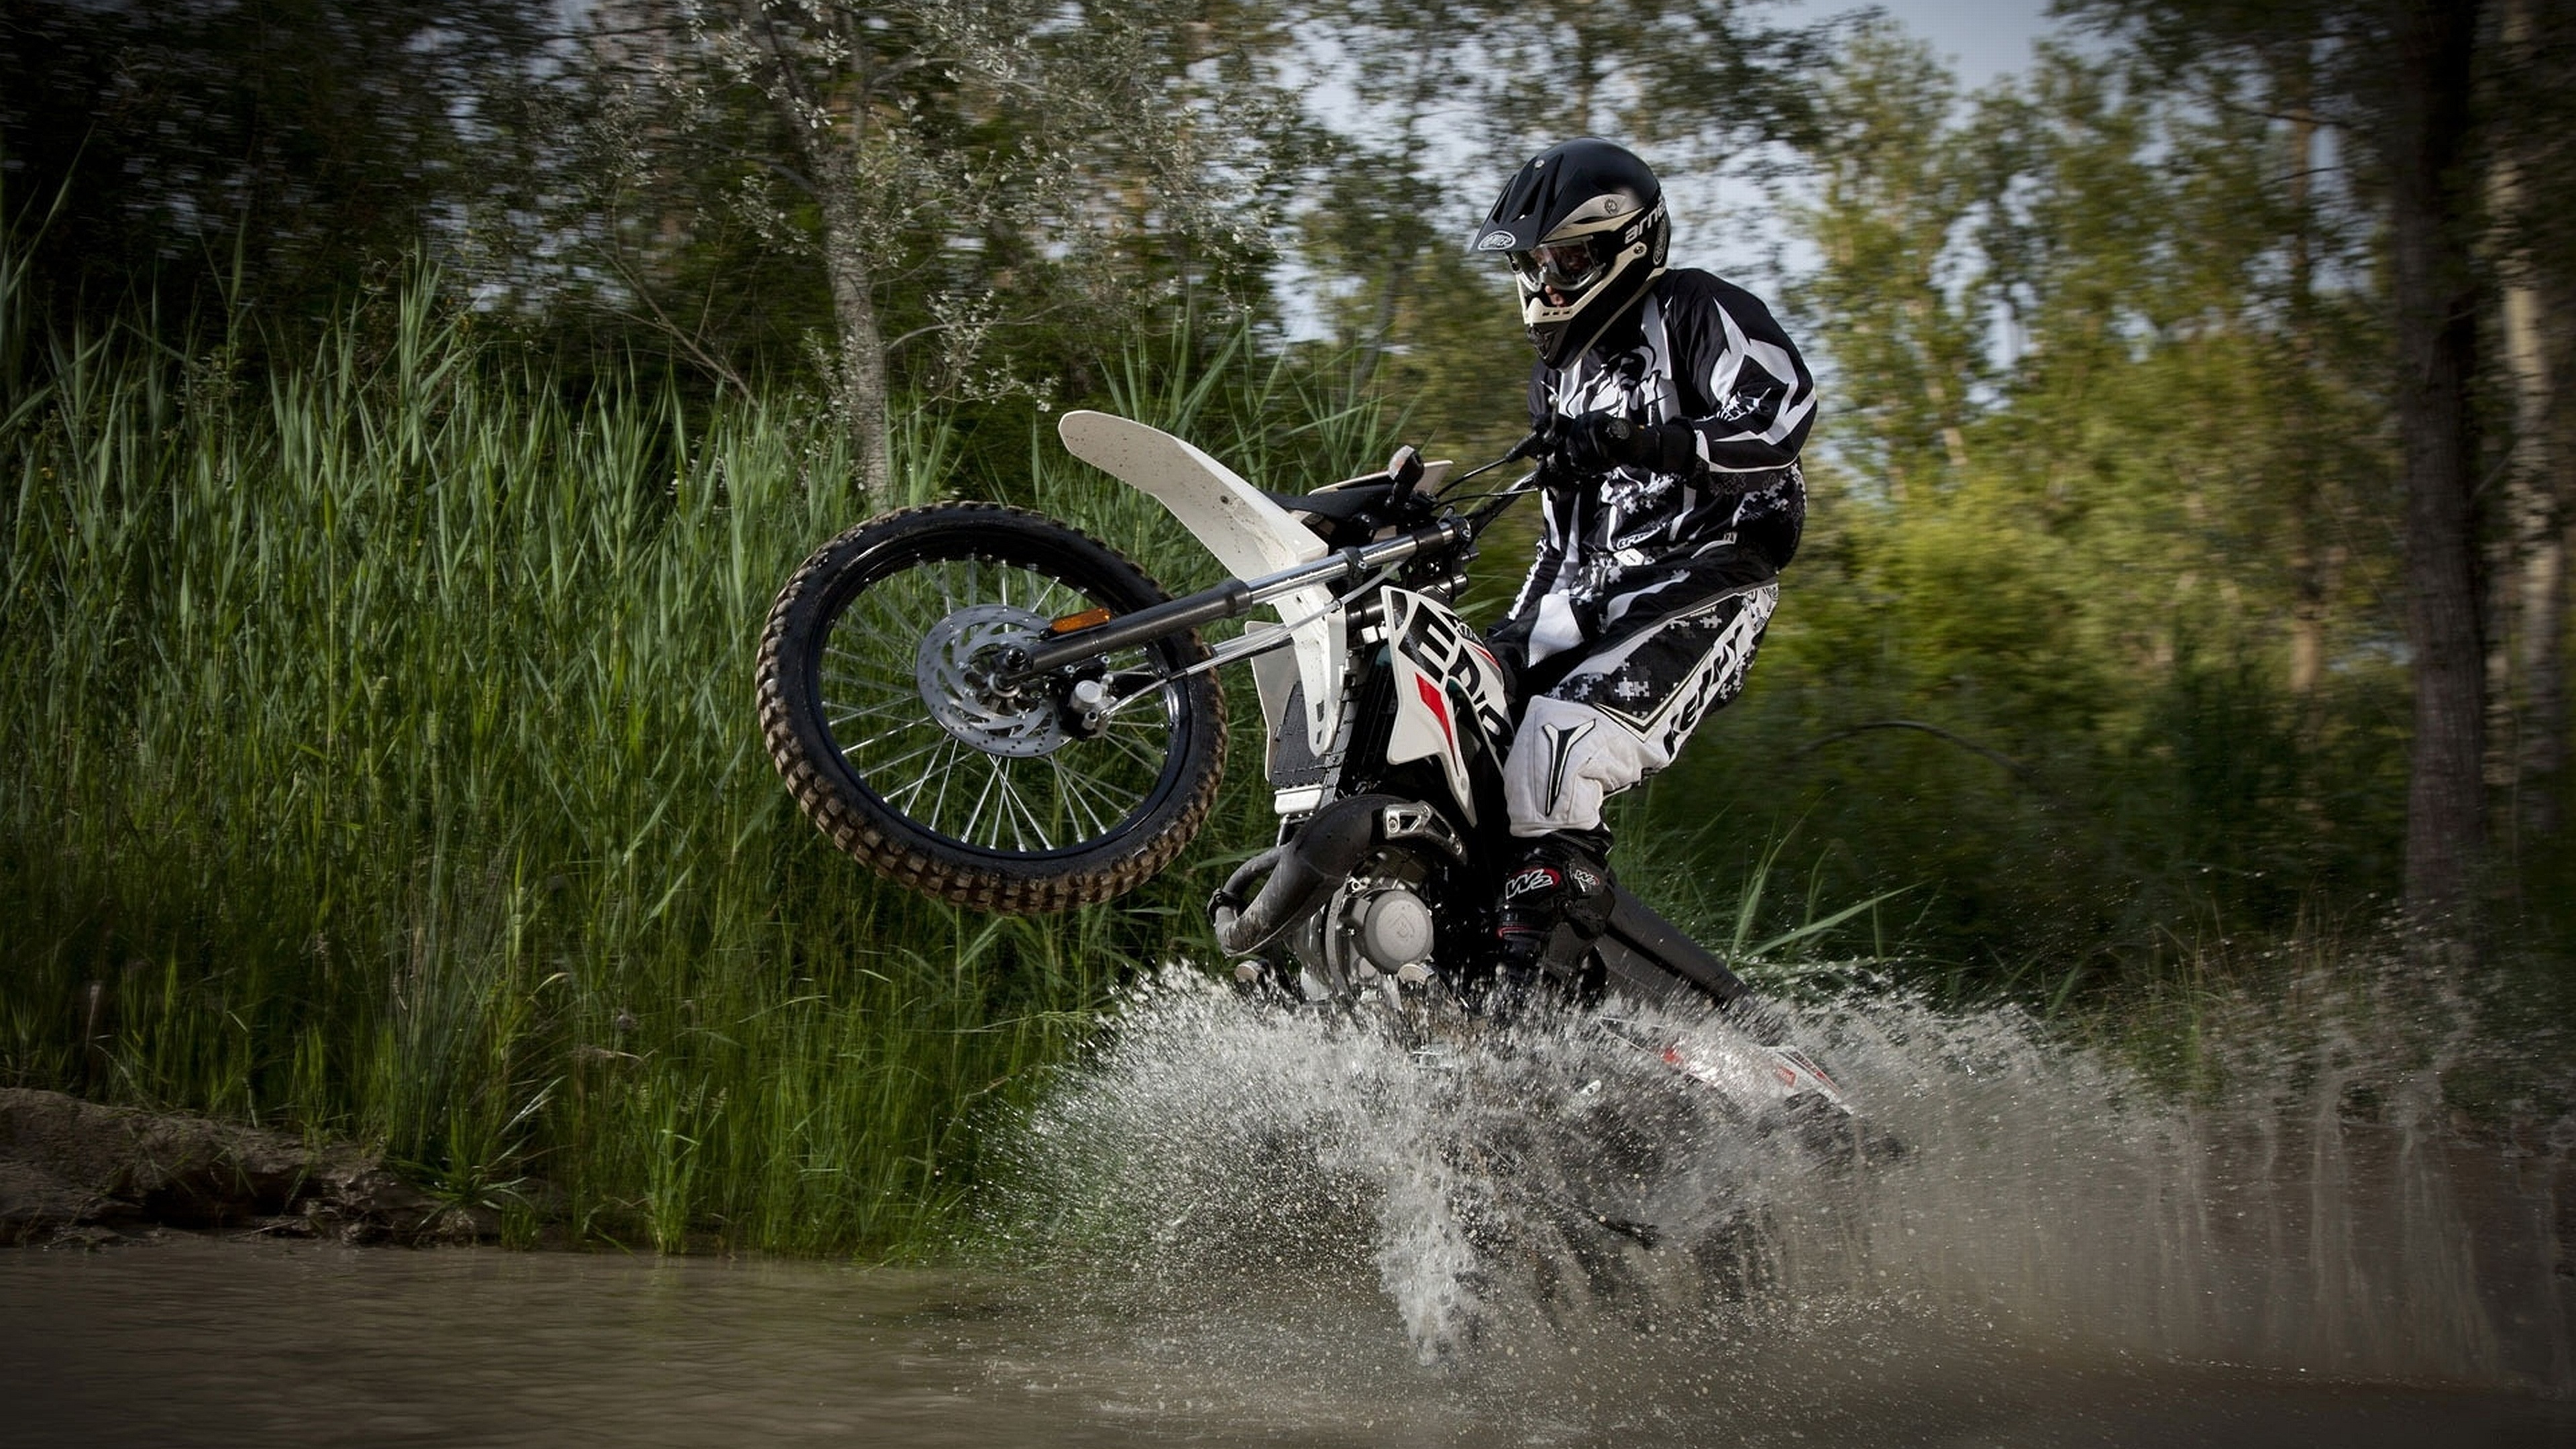 Enduro Motorbike: KTM Enduro, Crazy Wheelie On The Dirt Bike, Water Spray From Under The Wheels, Pro Motorcycle Race Suit. 3840x2160 4K Wallpaper.